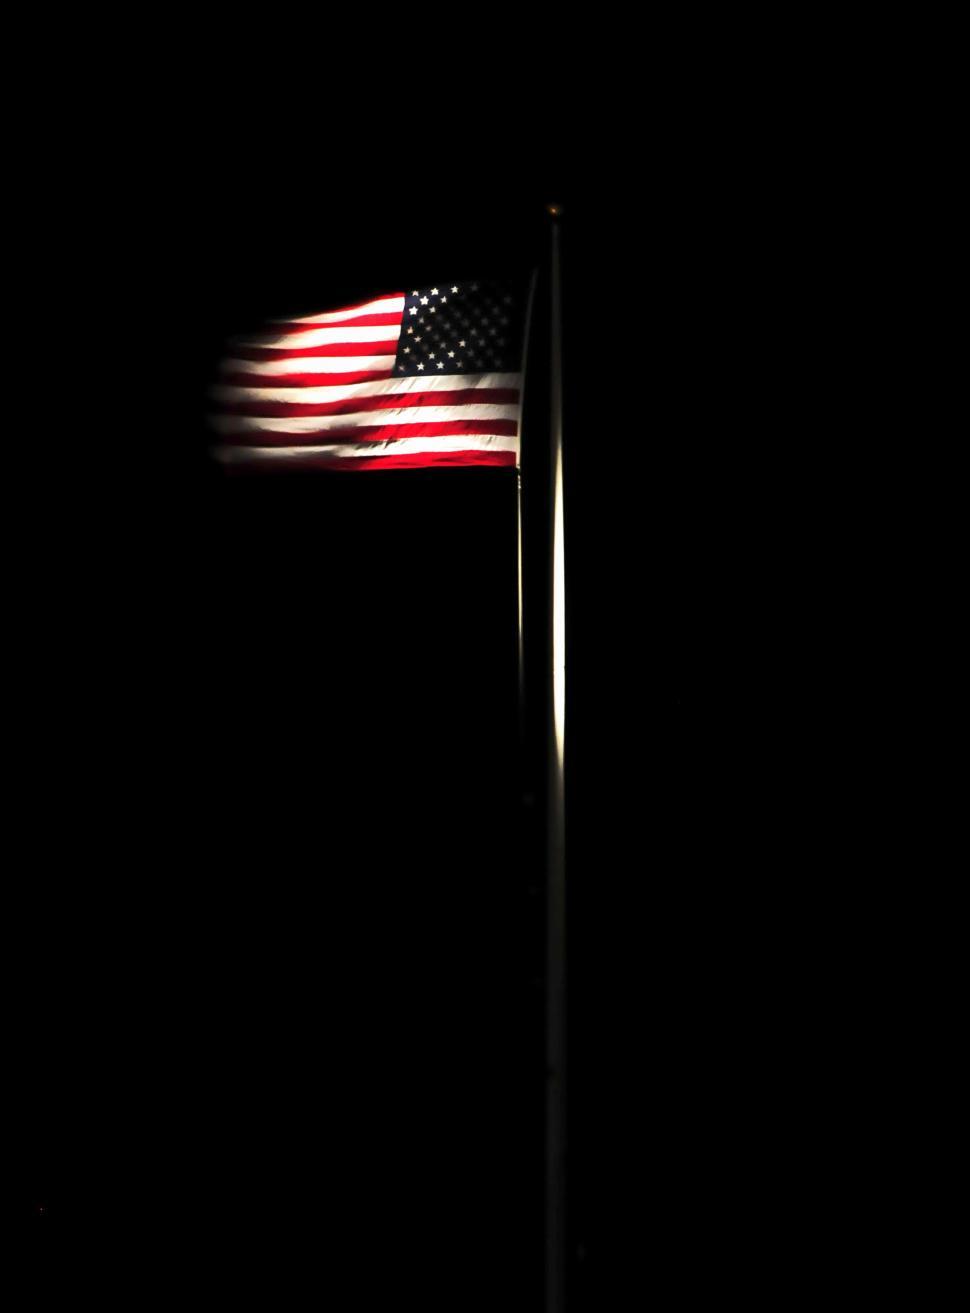 Free Image of American Flag Illuminated in the Dark 